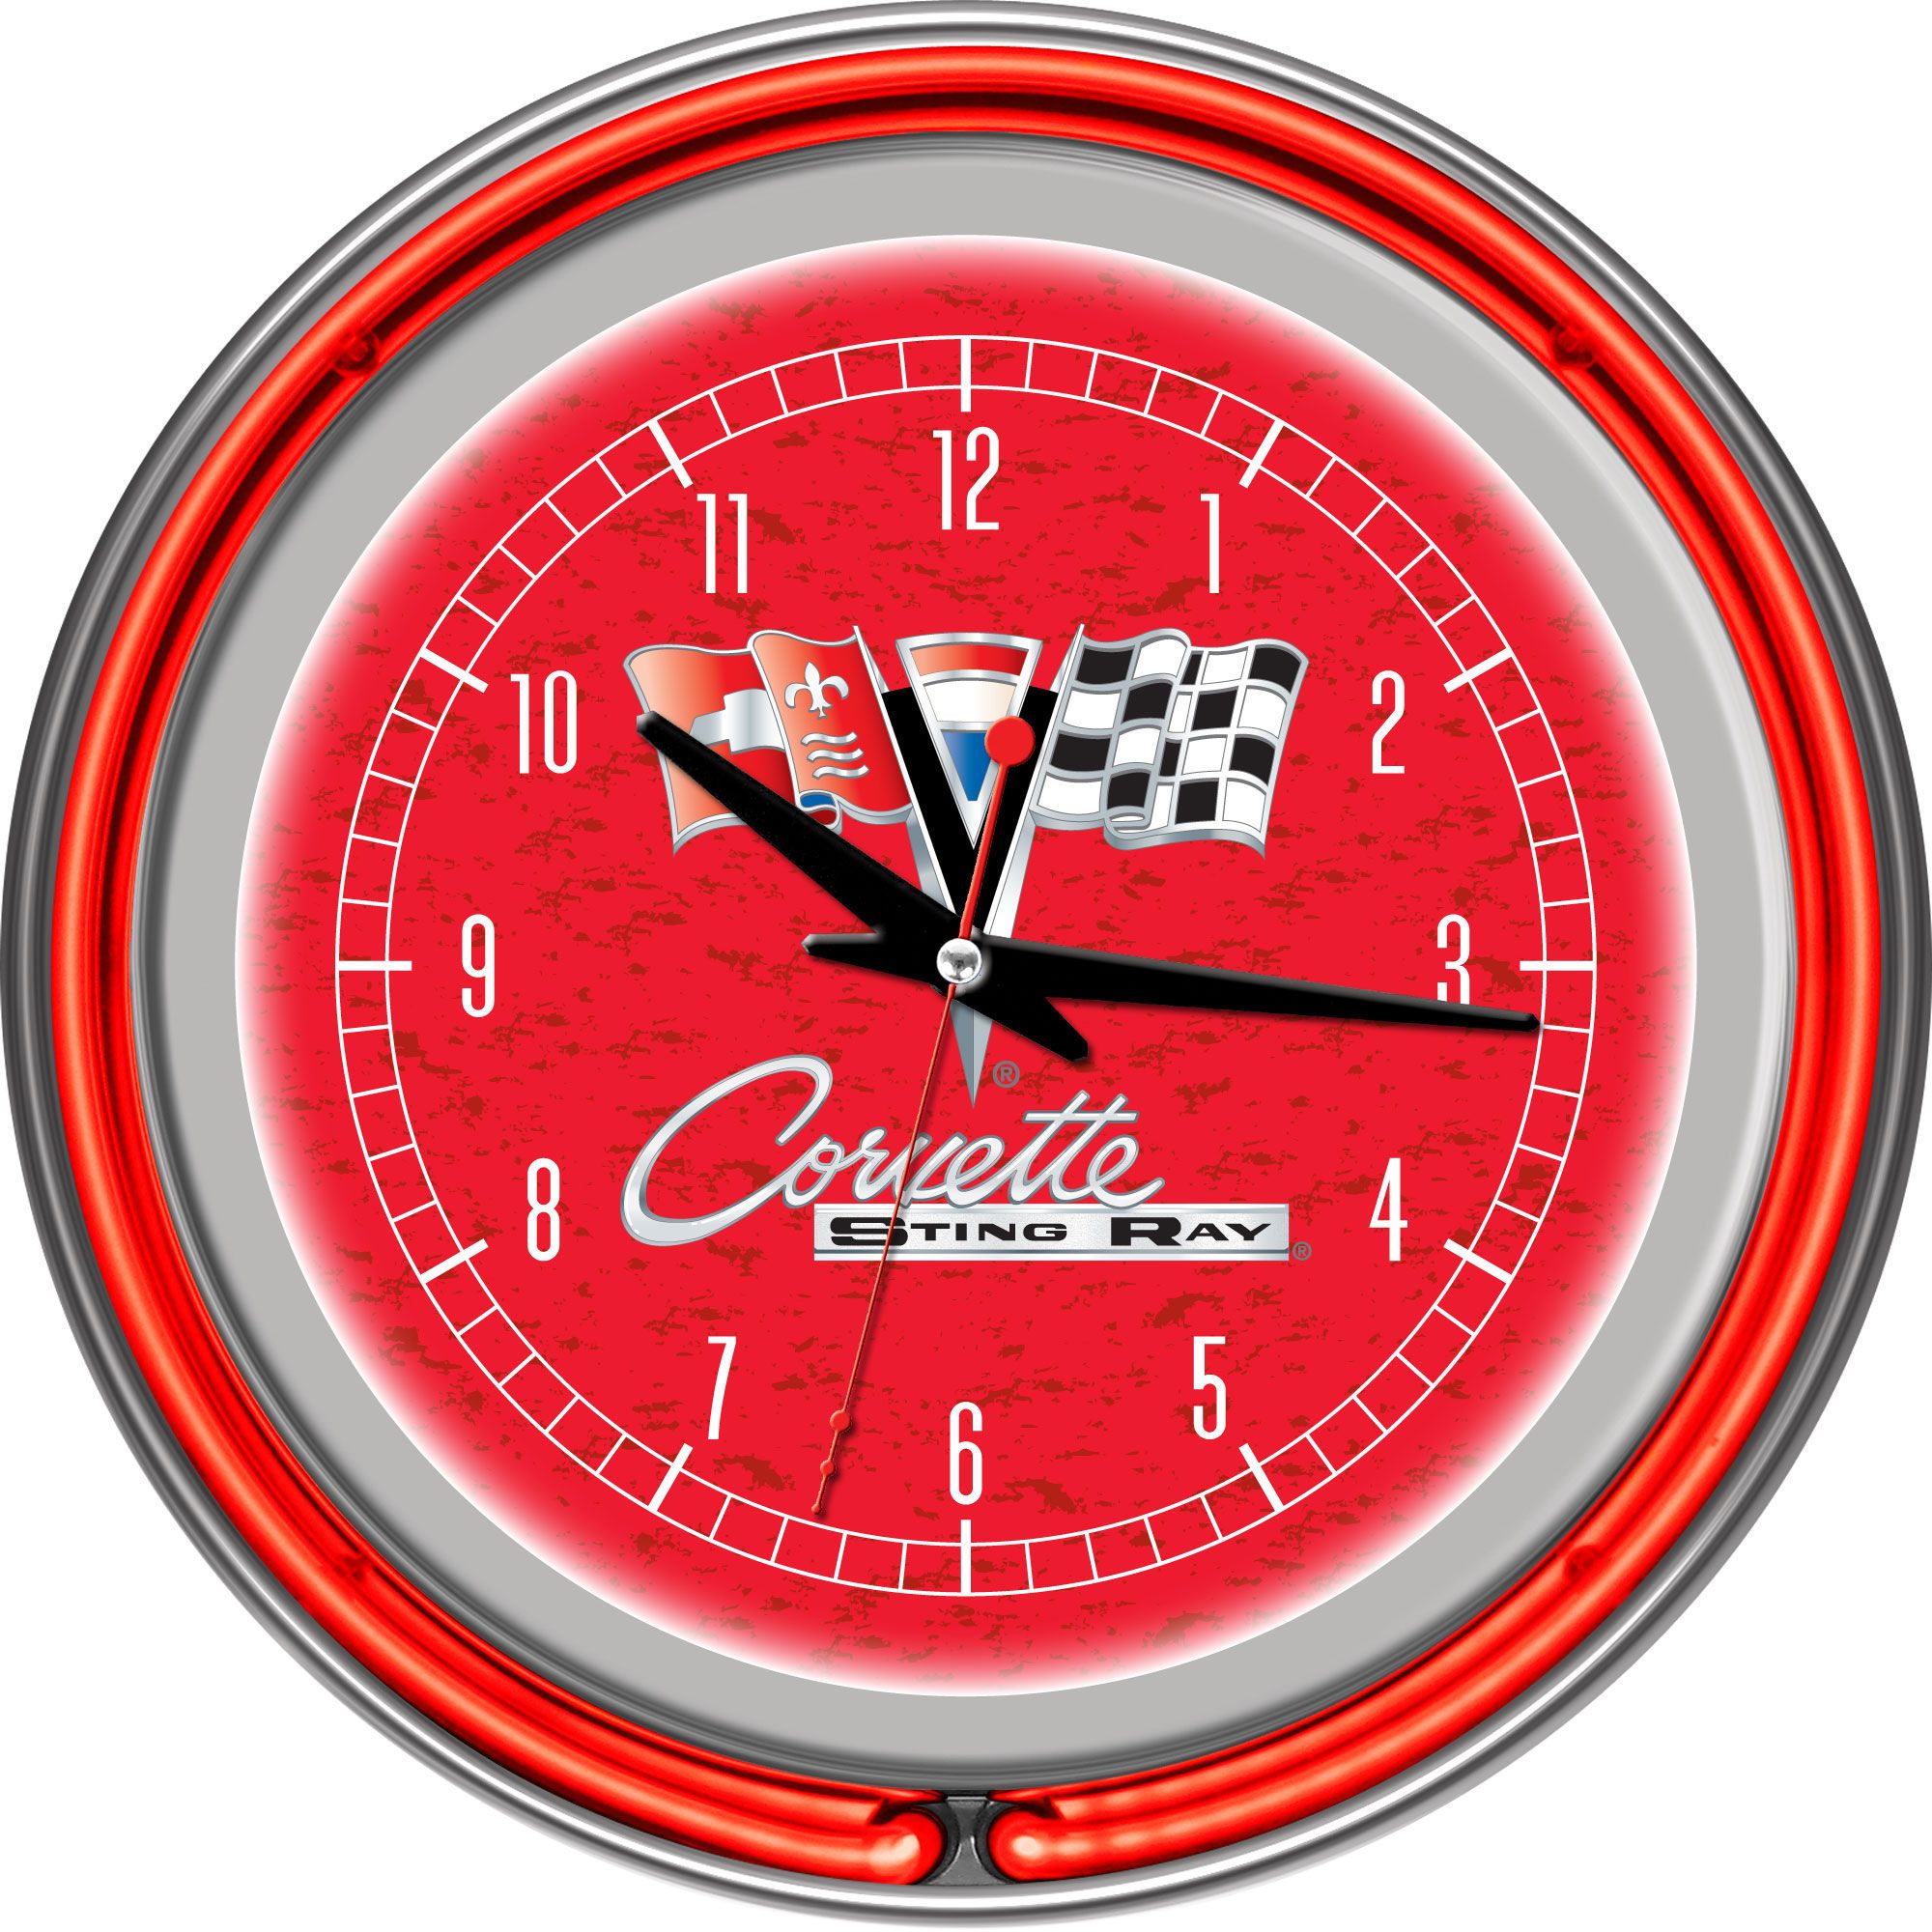 Chevy Corvette C2 Red Chrome Double Ring Neon Clock